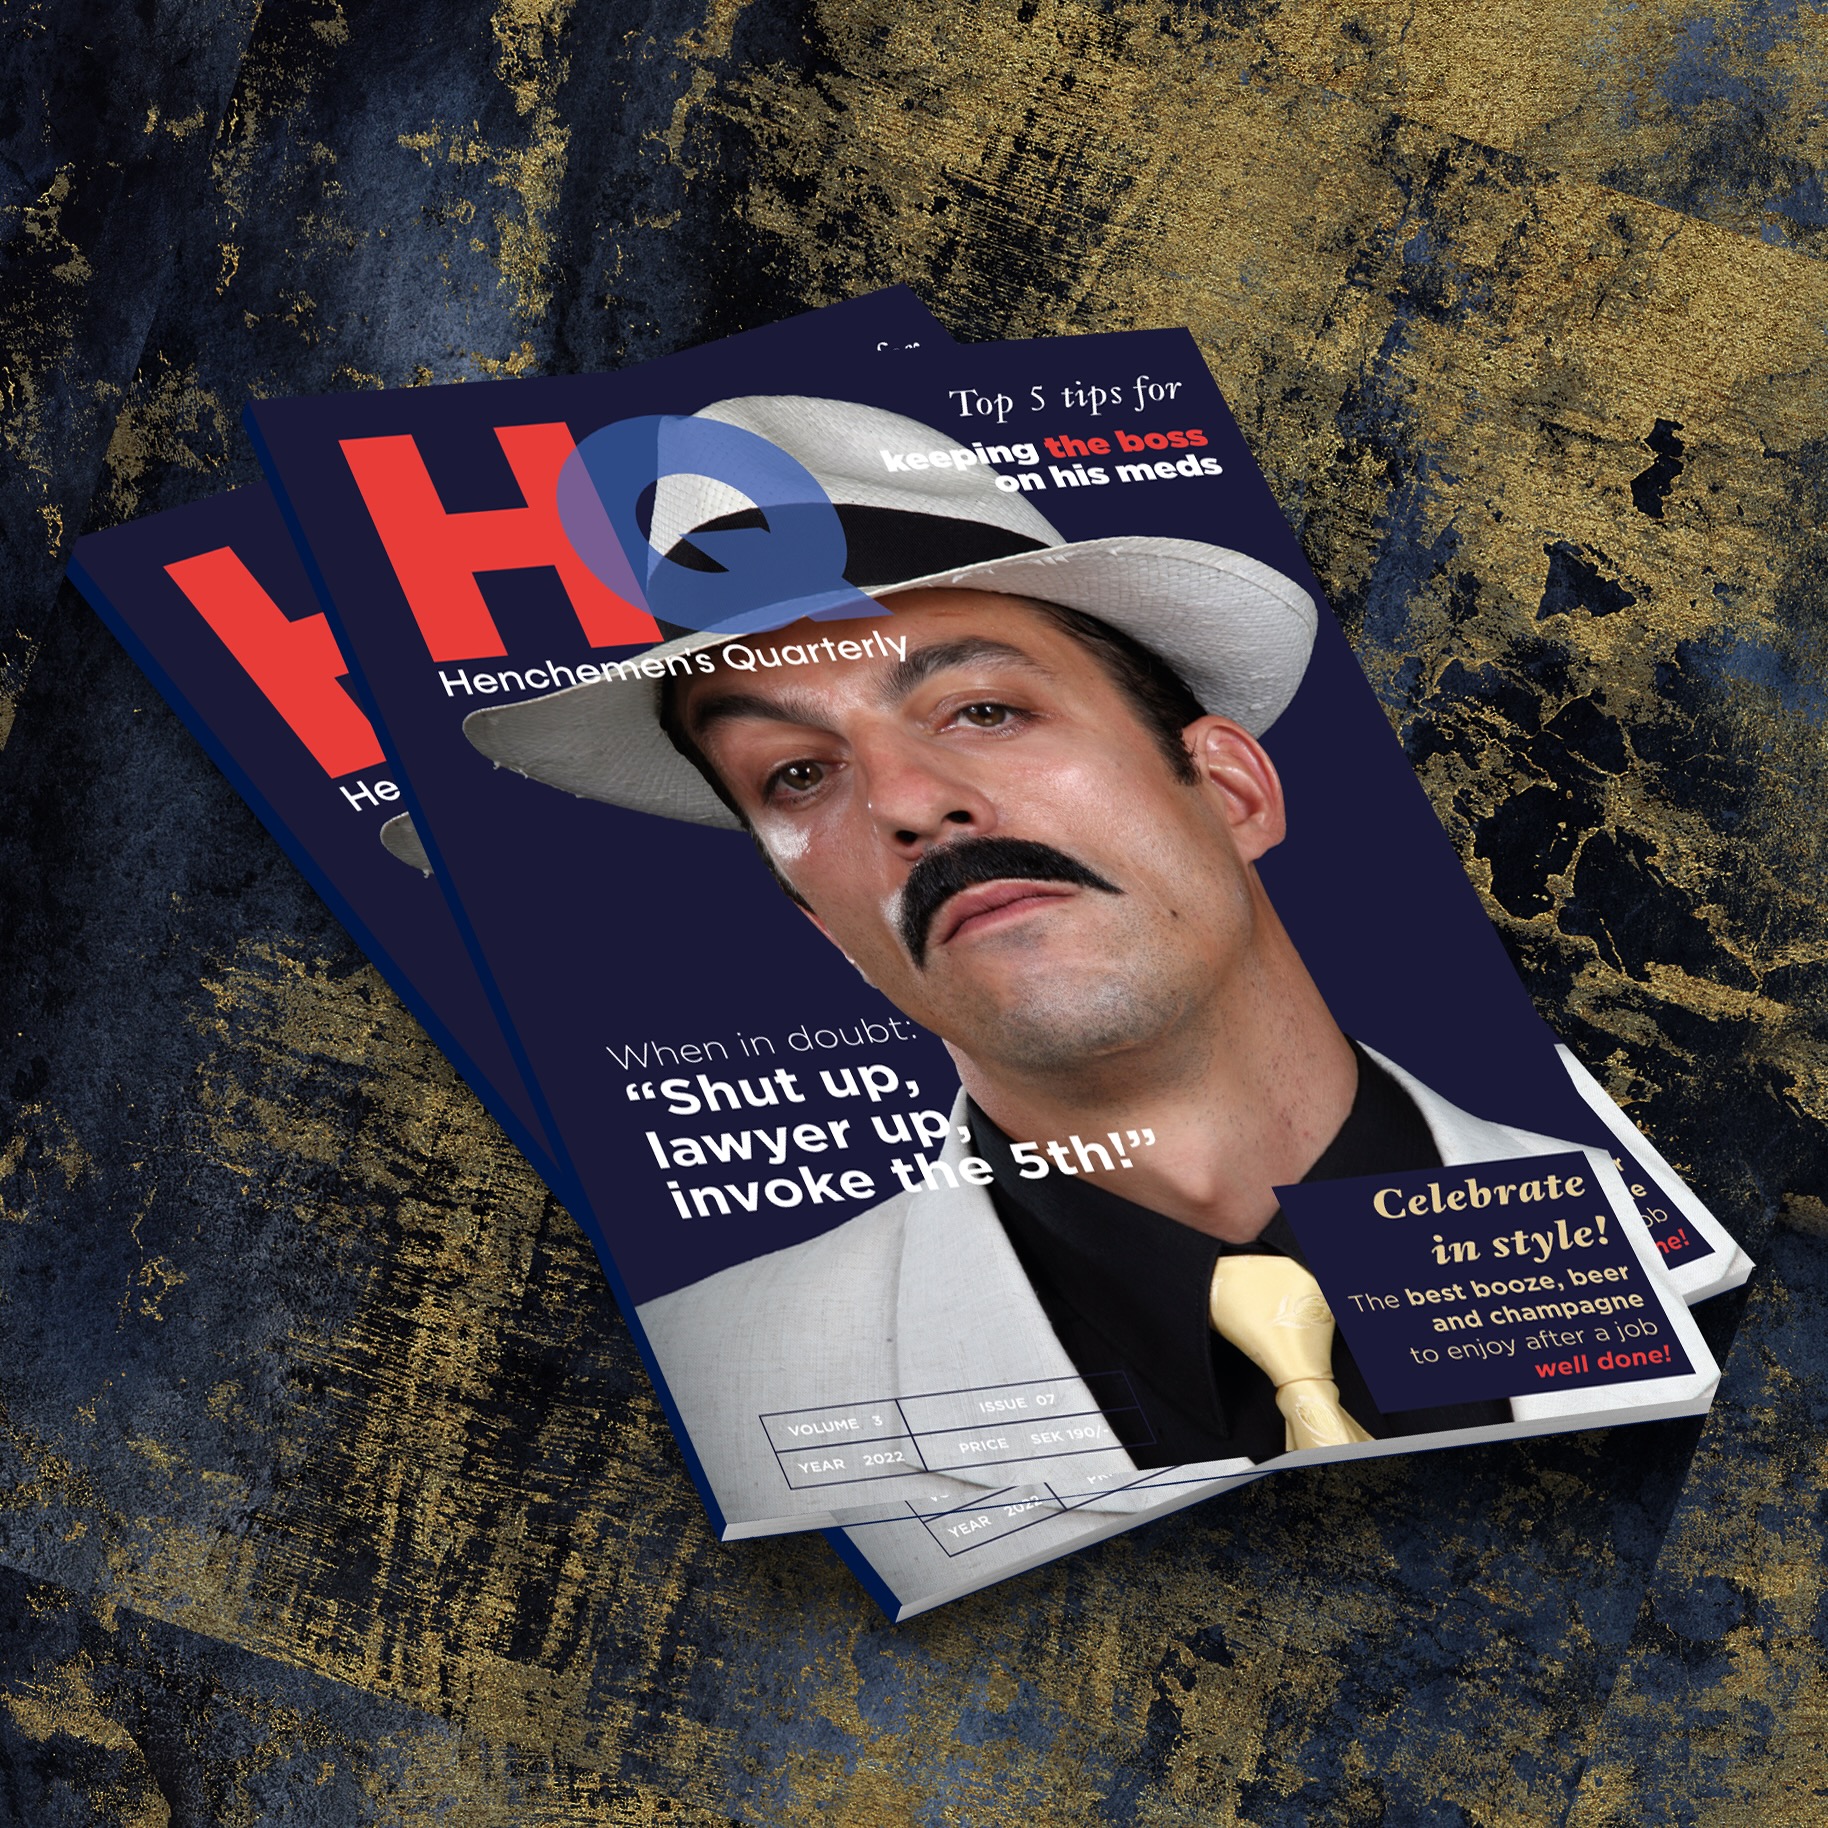 Mock-up cover for HQ - Henchemen's Quarterly